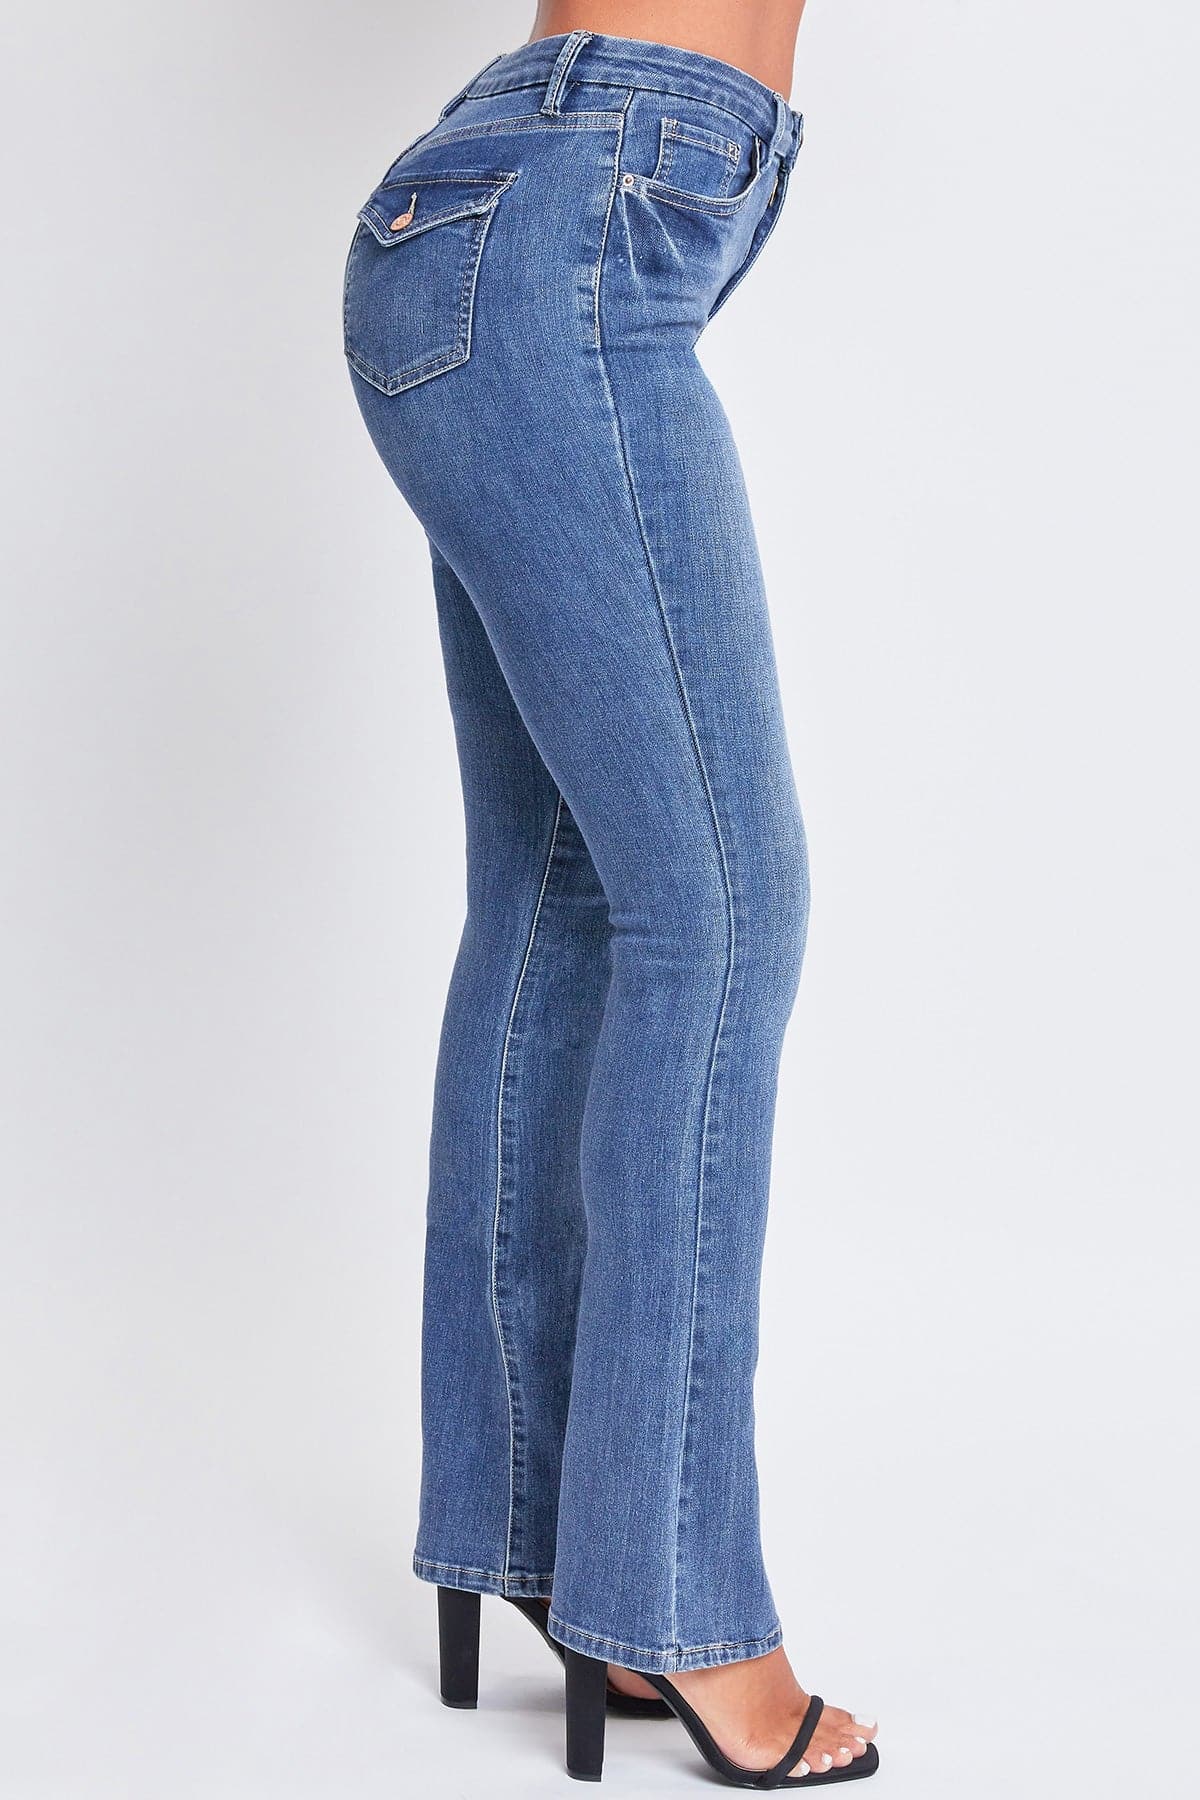 YMI Jeans 12 Royalty Boot Thick Stitch Flap Pocket Women Denim Wash Rise  Stretch 